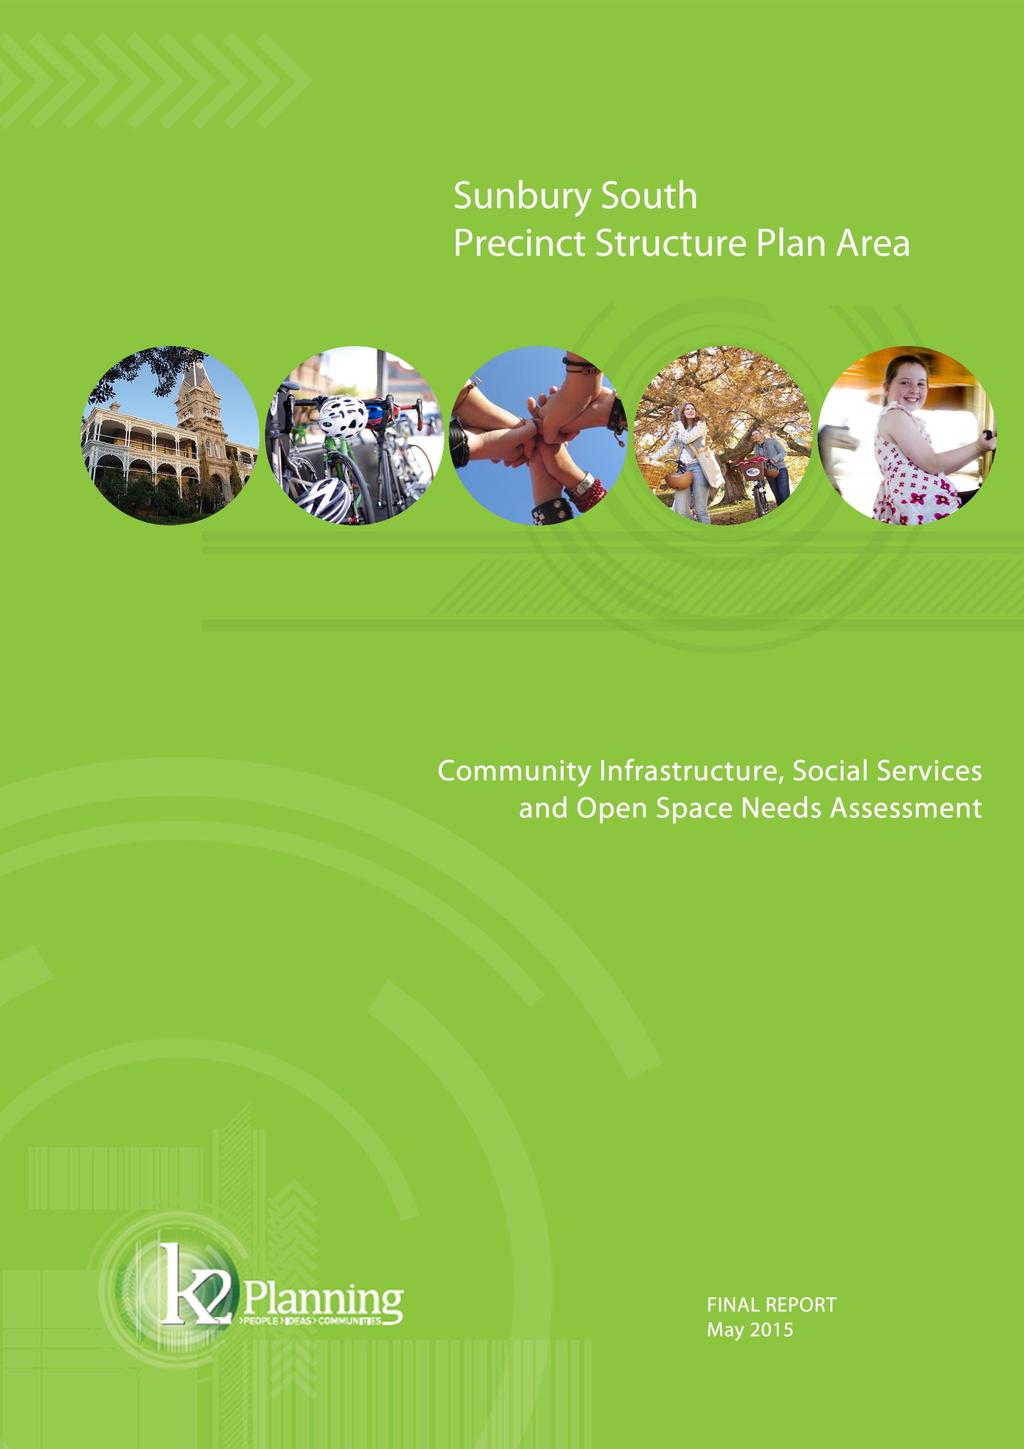 Sunbury South Precinct Structure Plan - Community